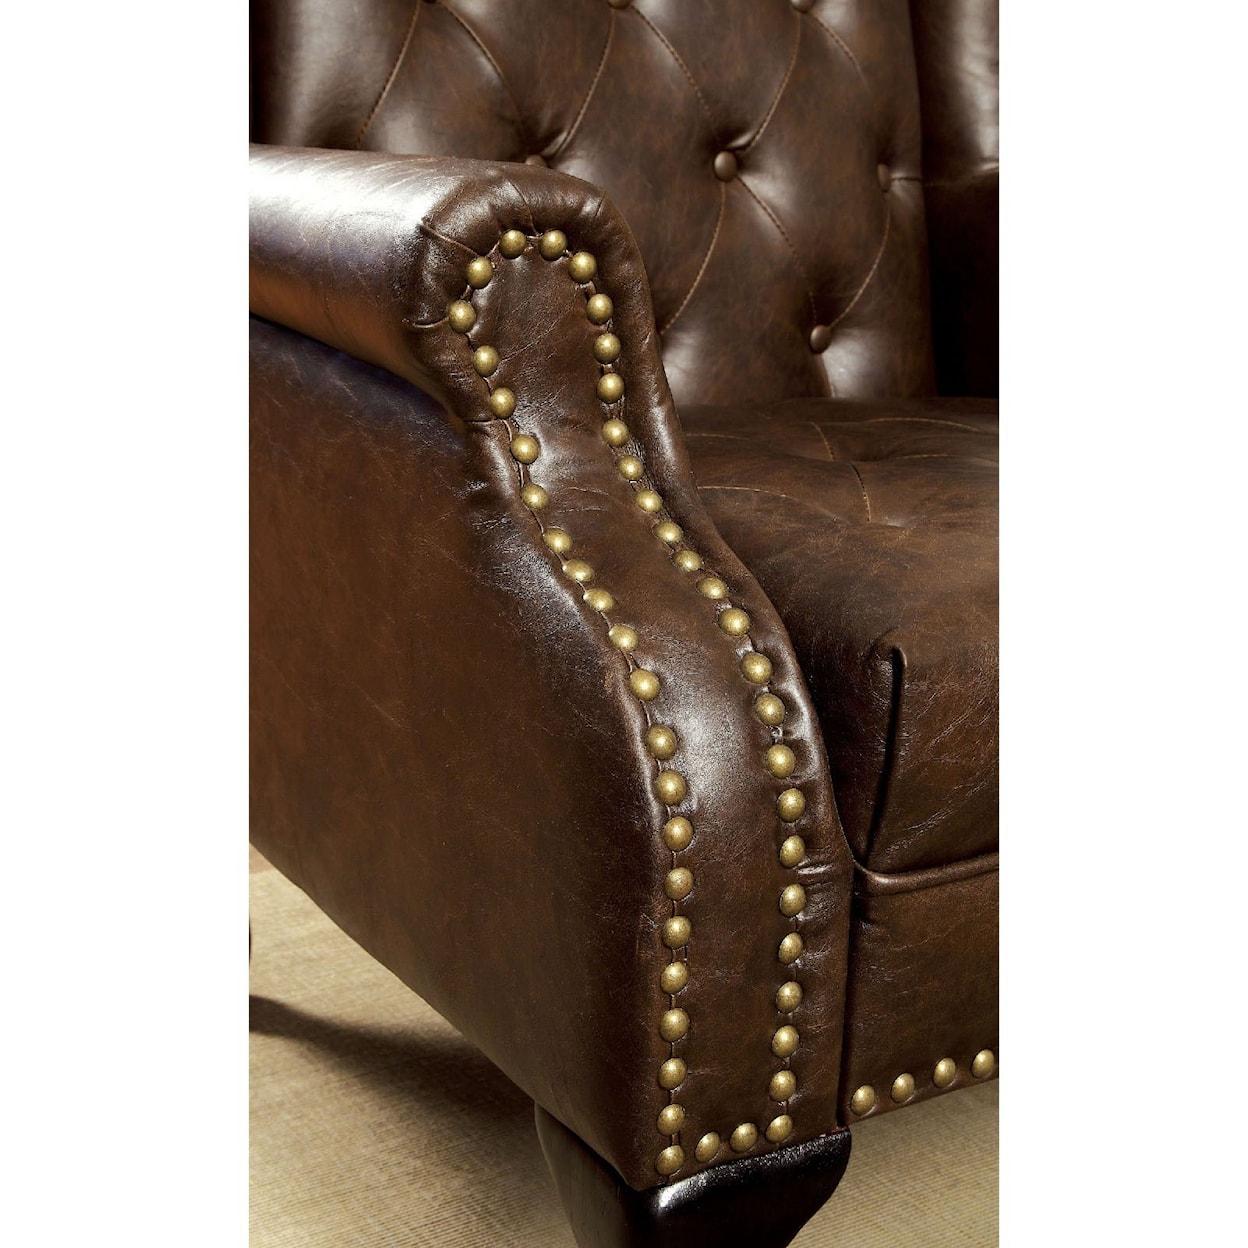 Furniture of America - FOA Vaugh Accent Chair w/ Ottoman